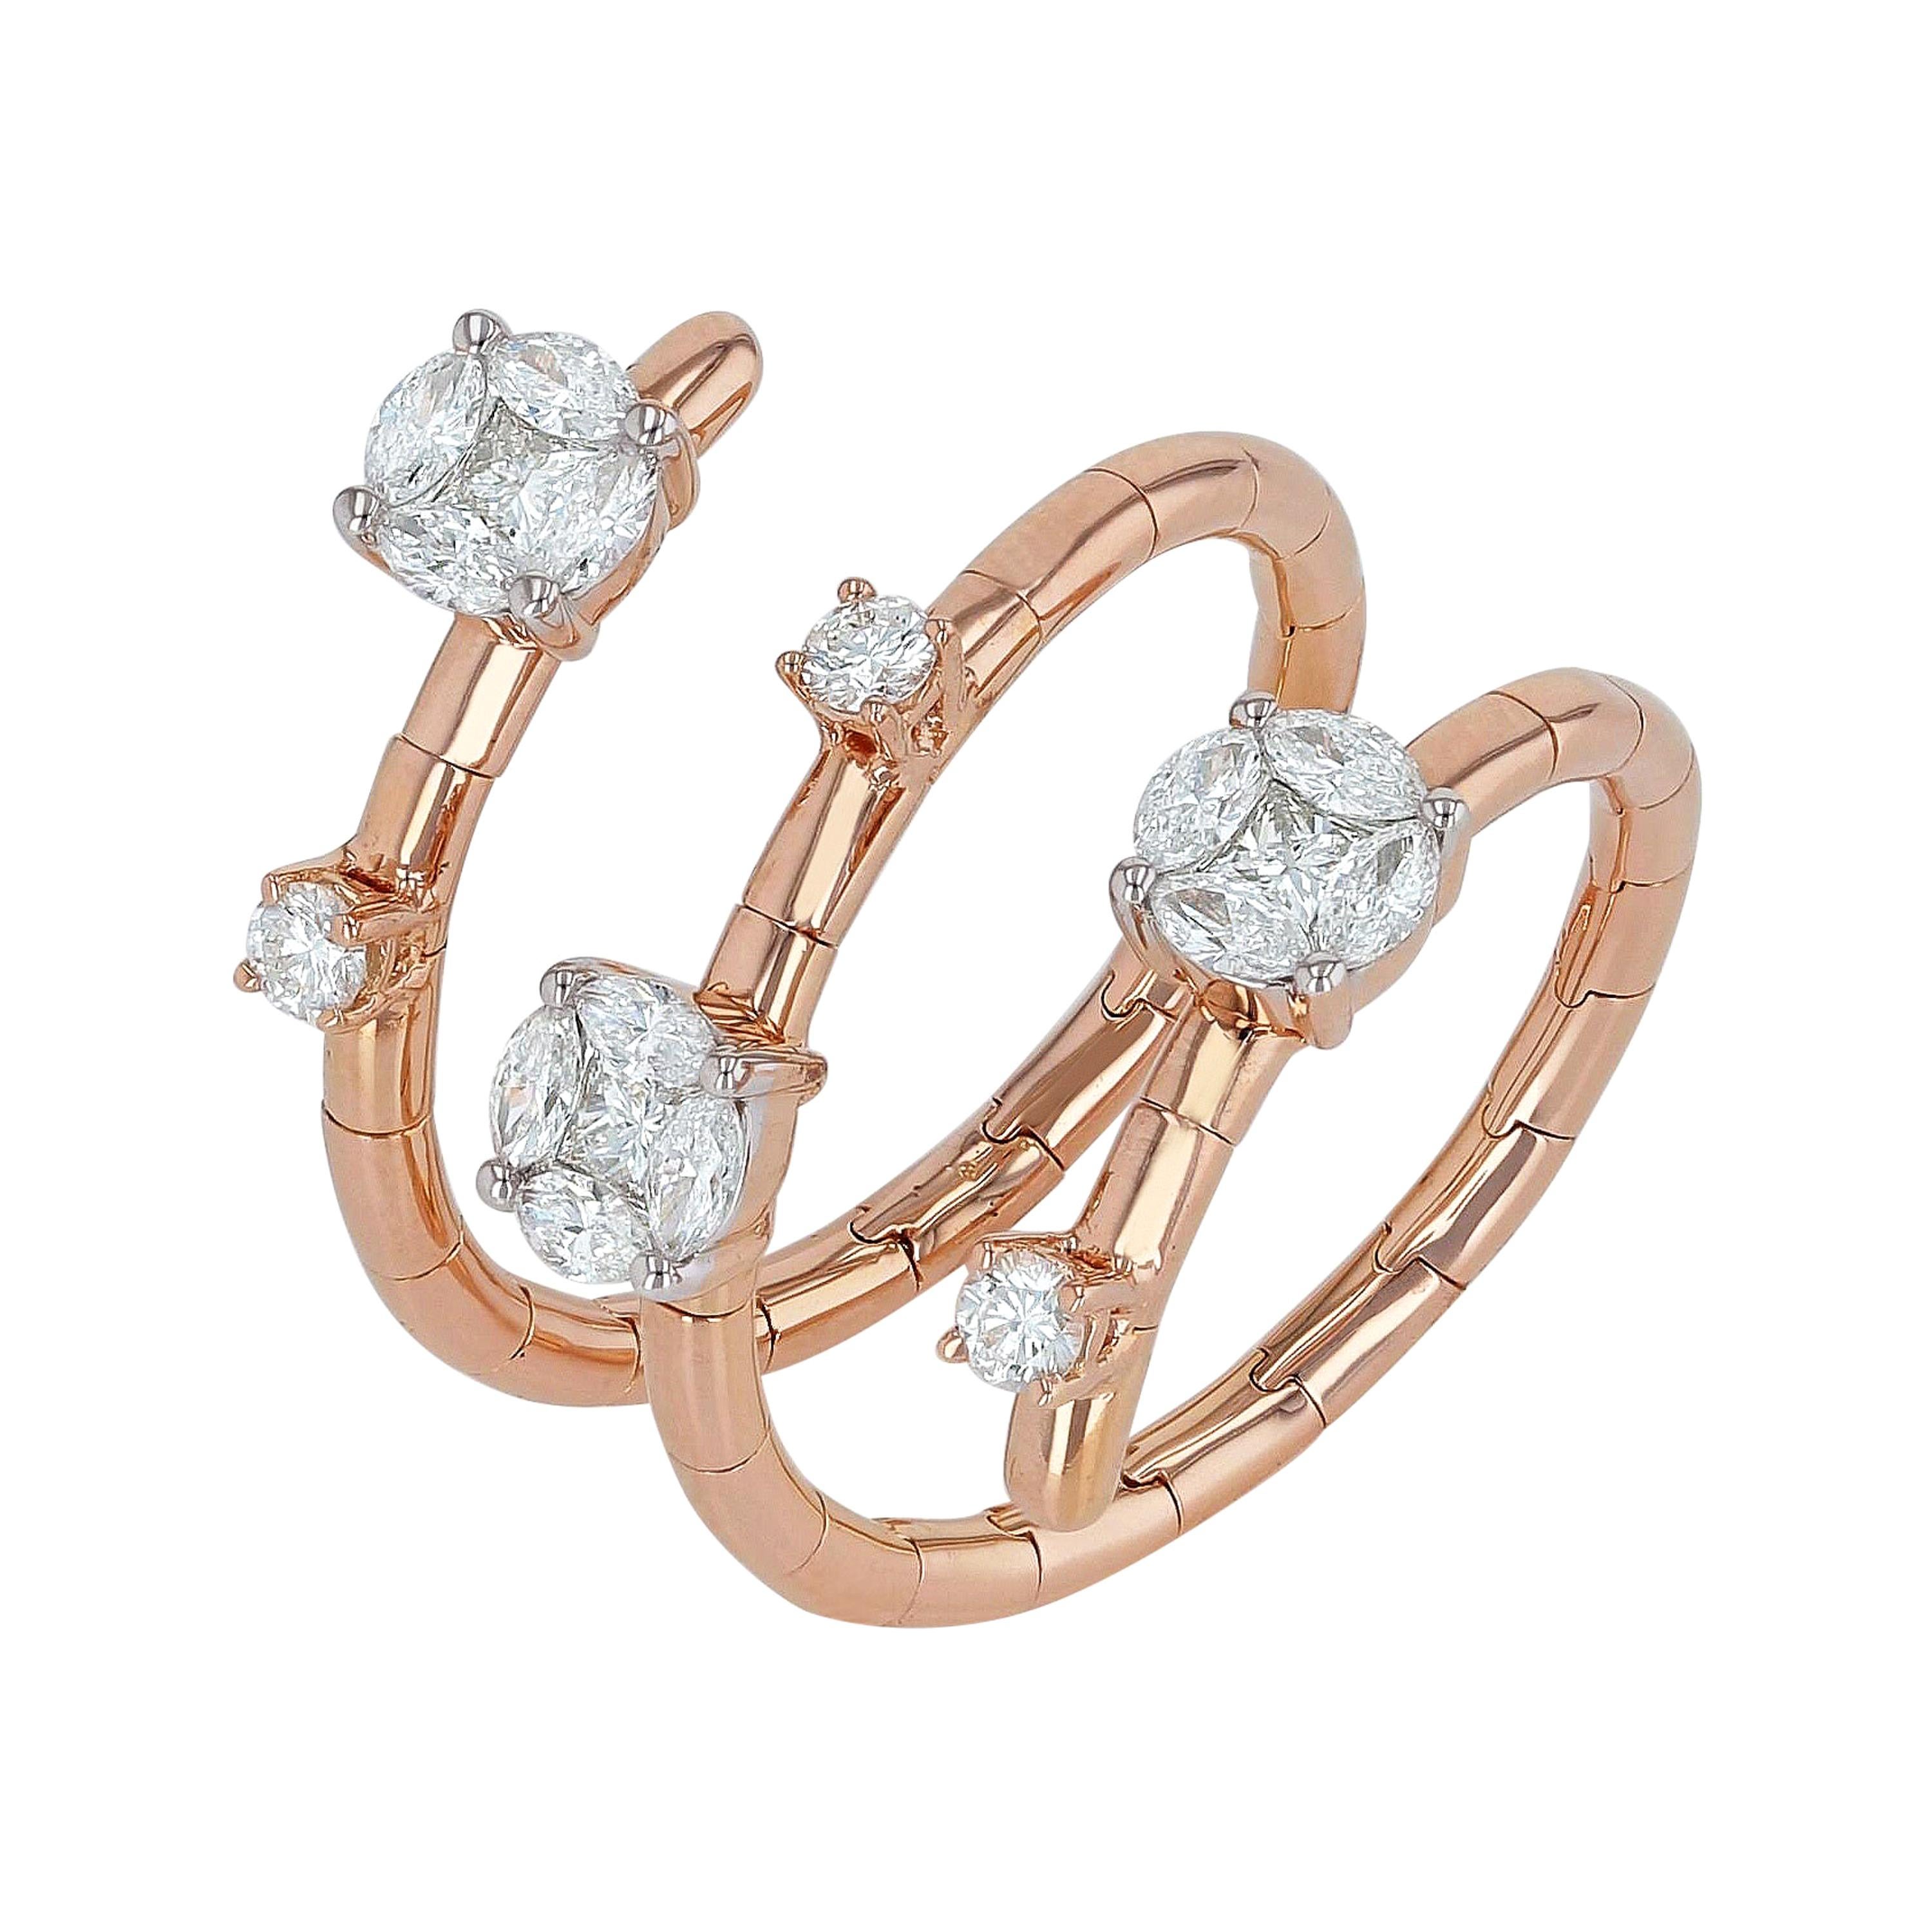 Amwaj Jewelry Round Cut Diamond Ring in 18 Karat Rose Gold